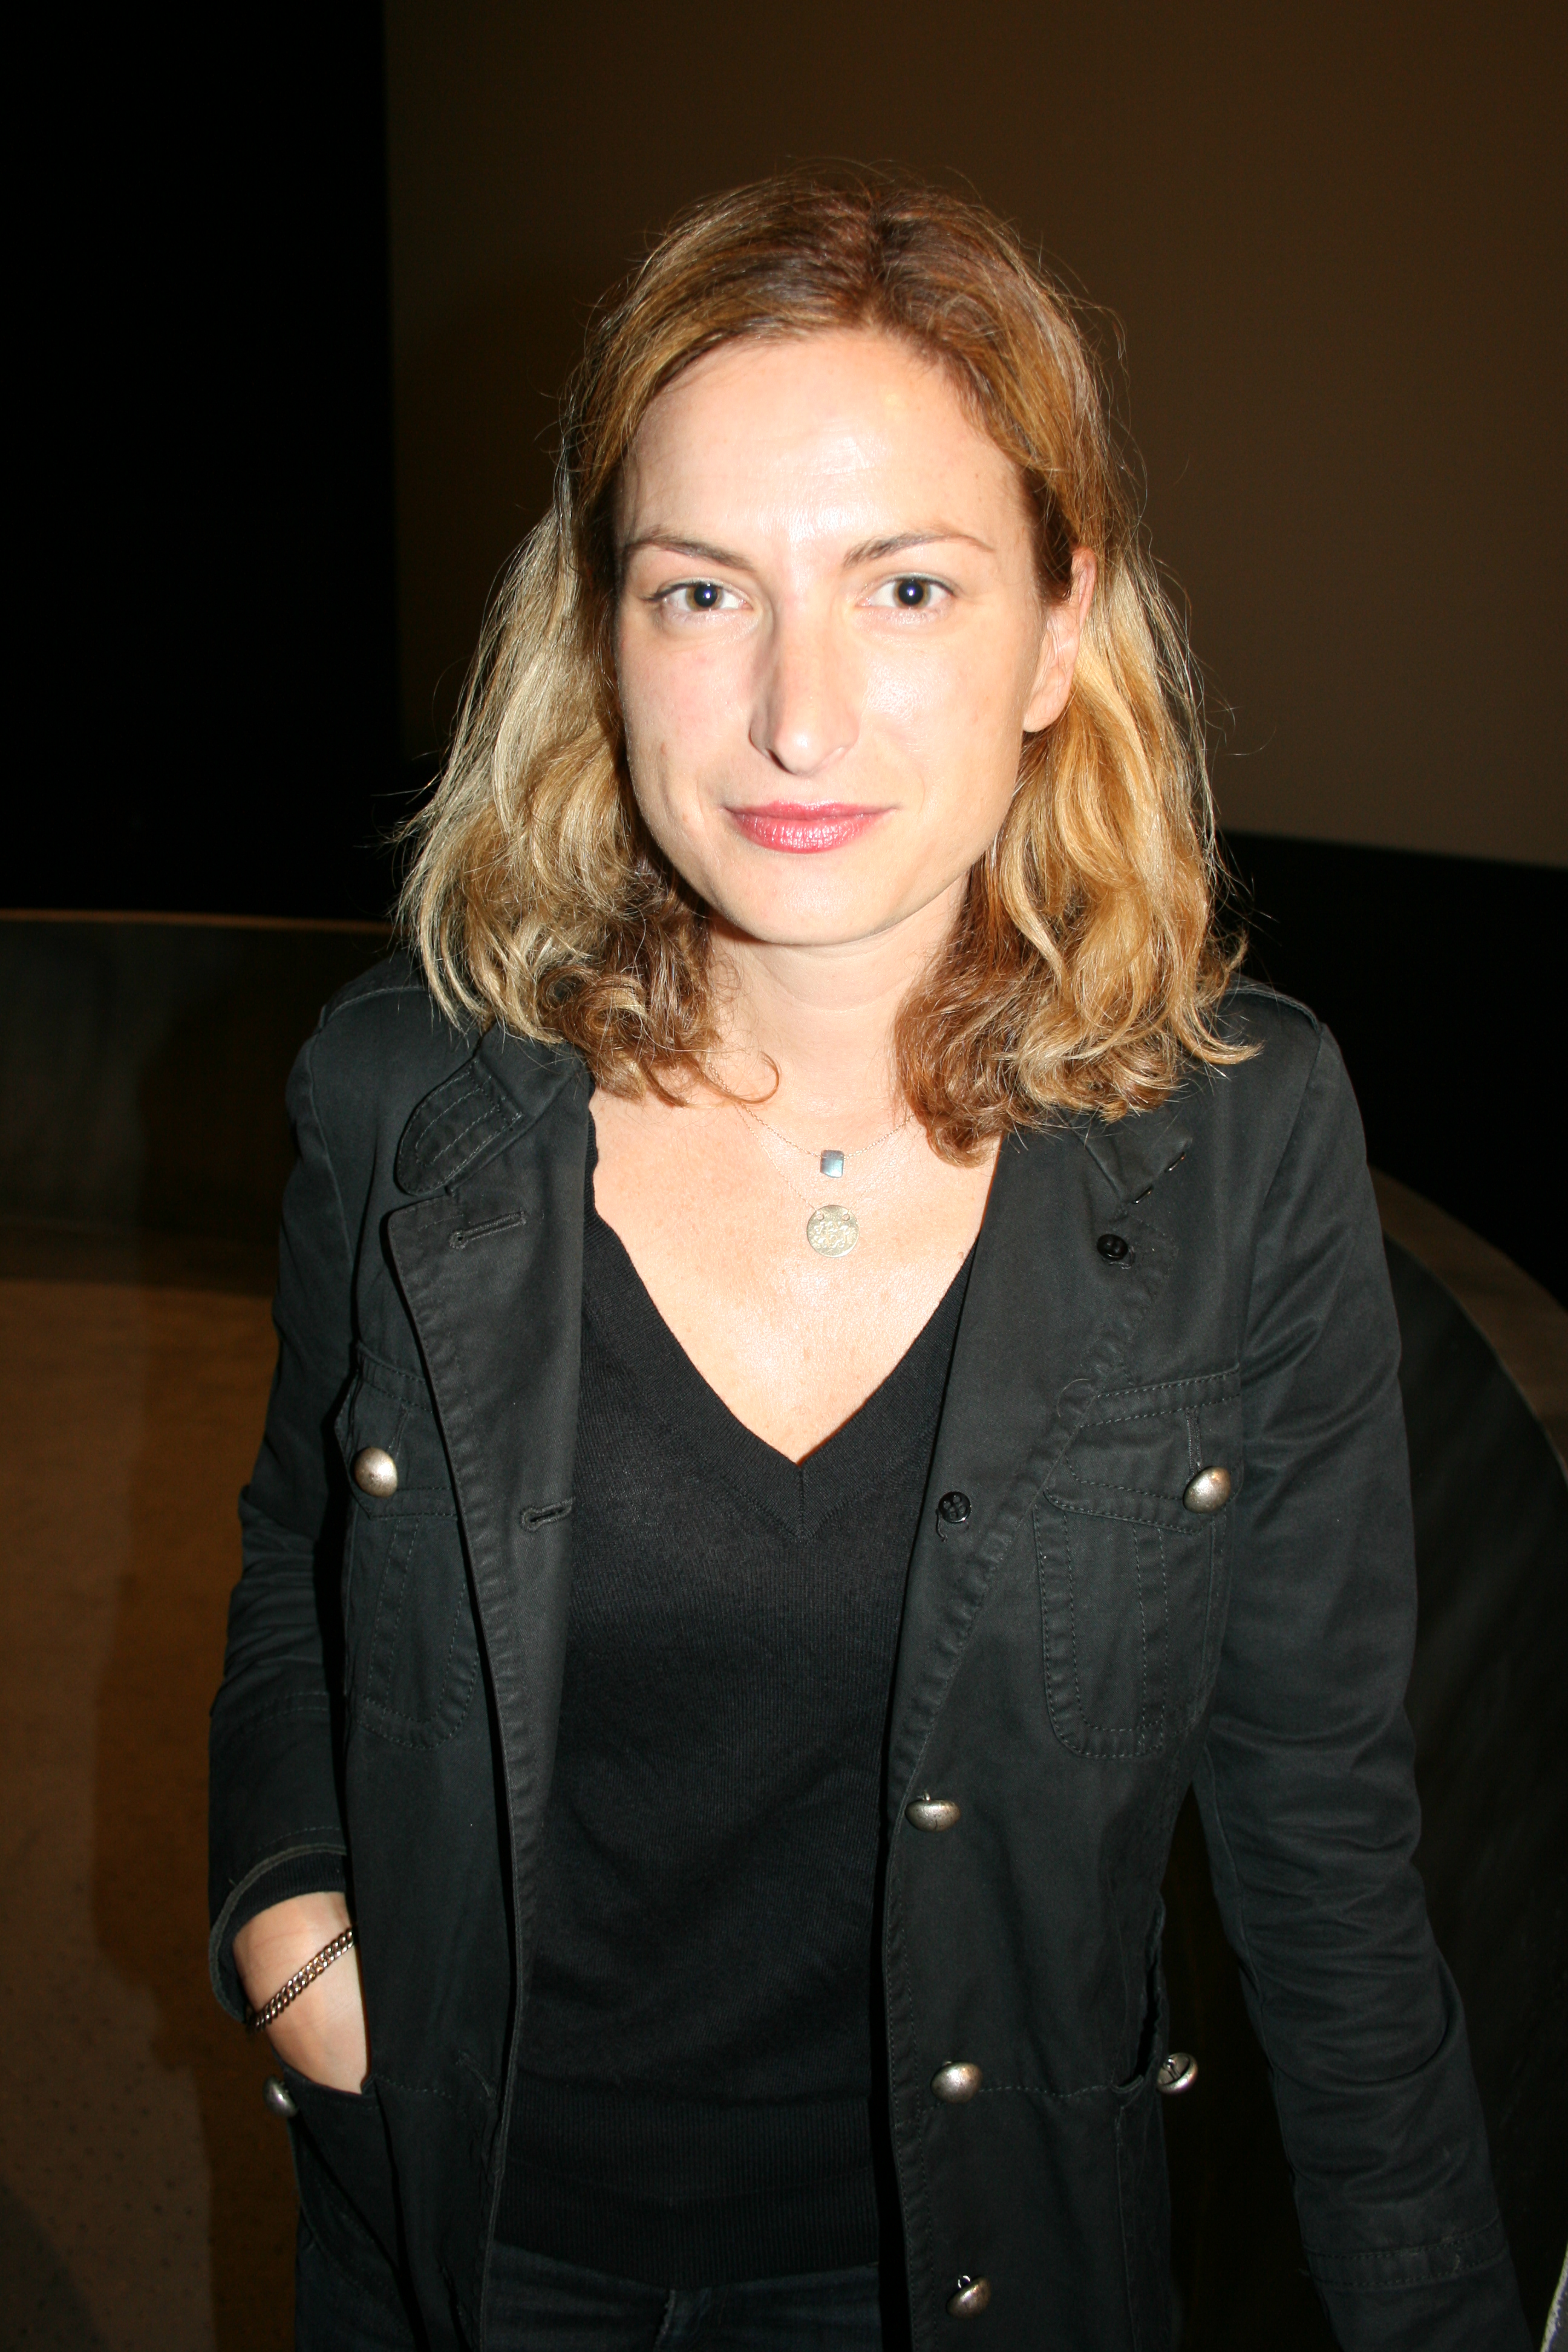 Sofia Coppola - Wikipedia